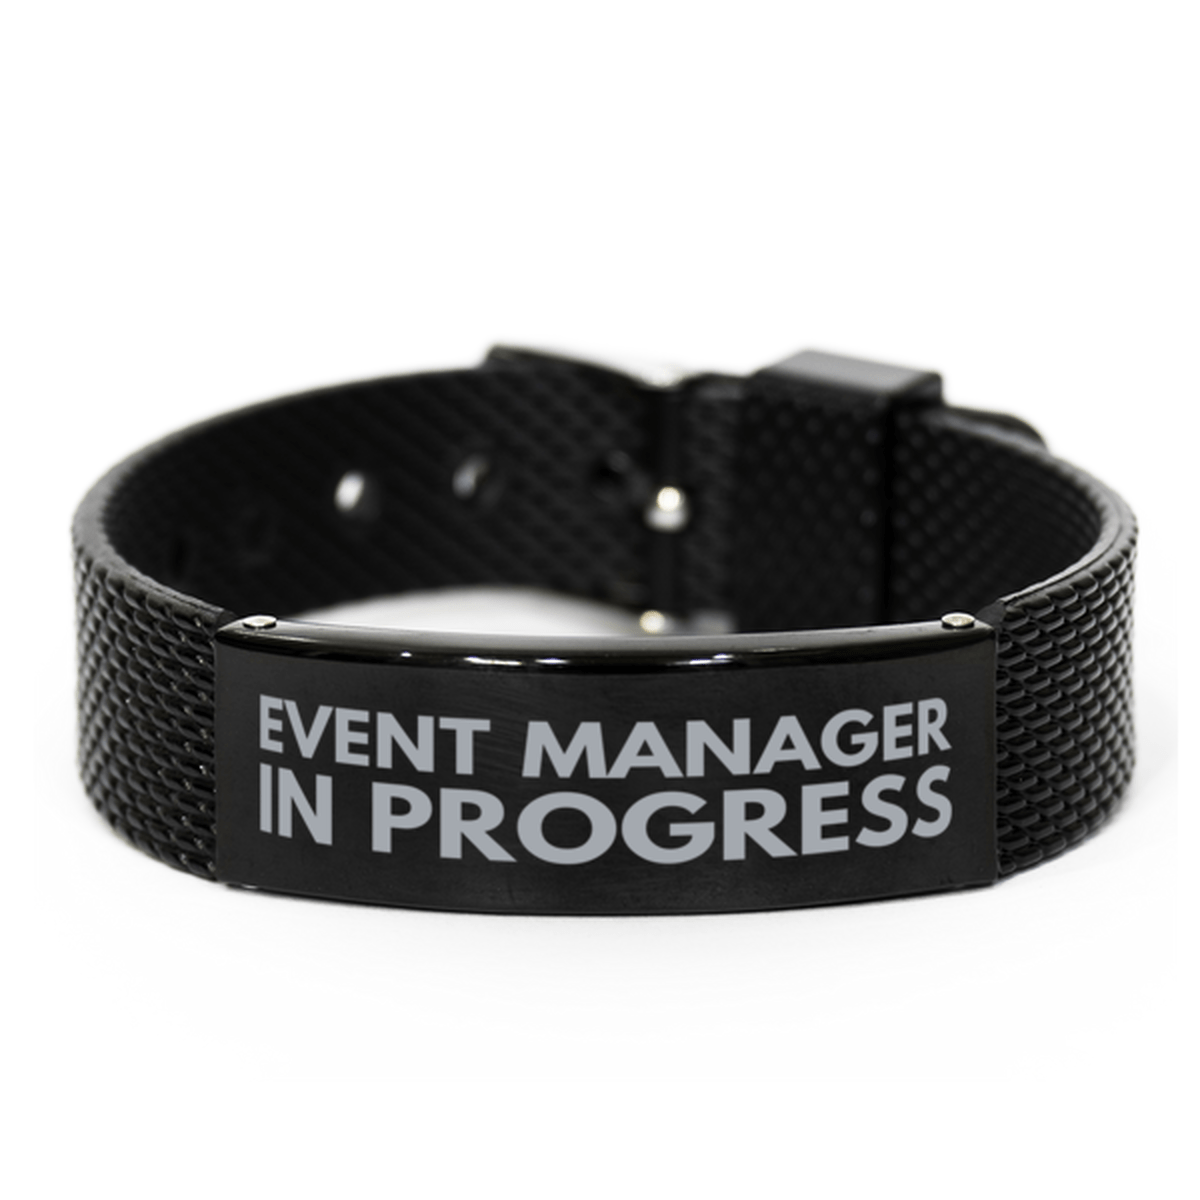 Inspirational Event Manager Black Shark Mesh Bracelet, Event Manager In Progress, Best Graduation Gifts for Students